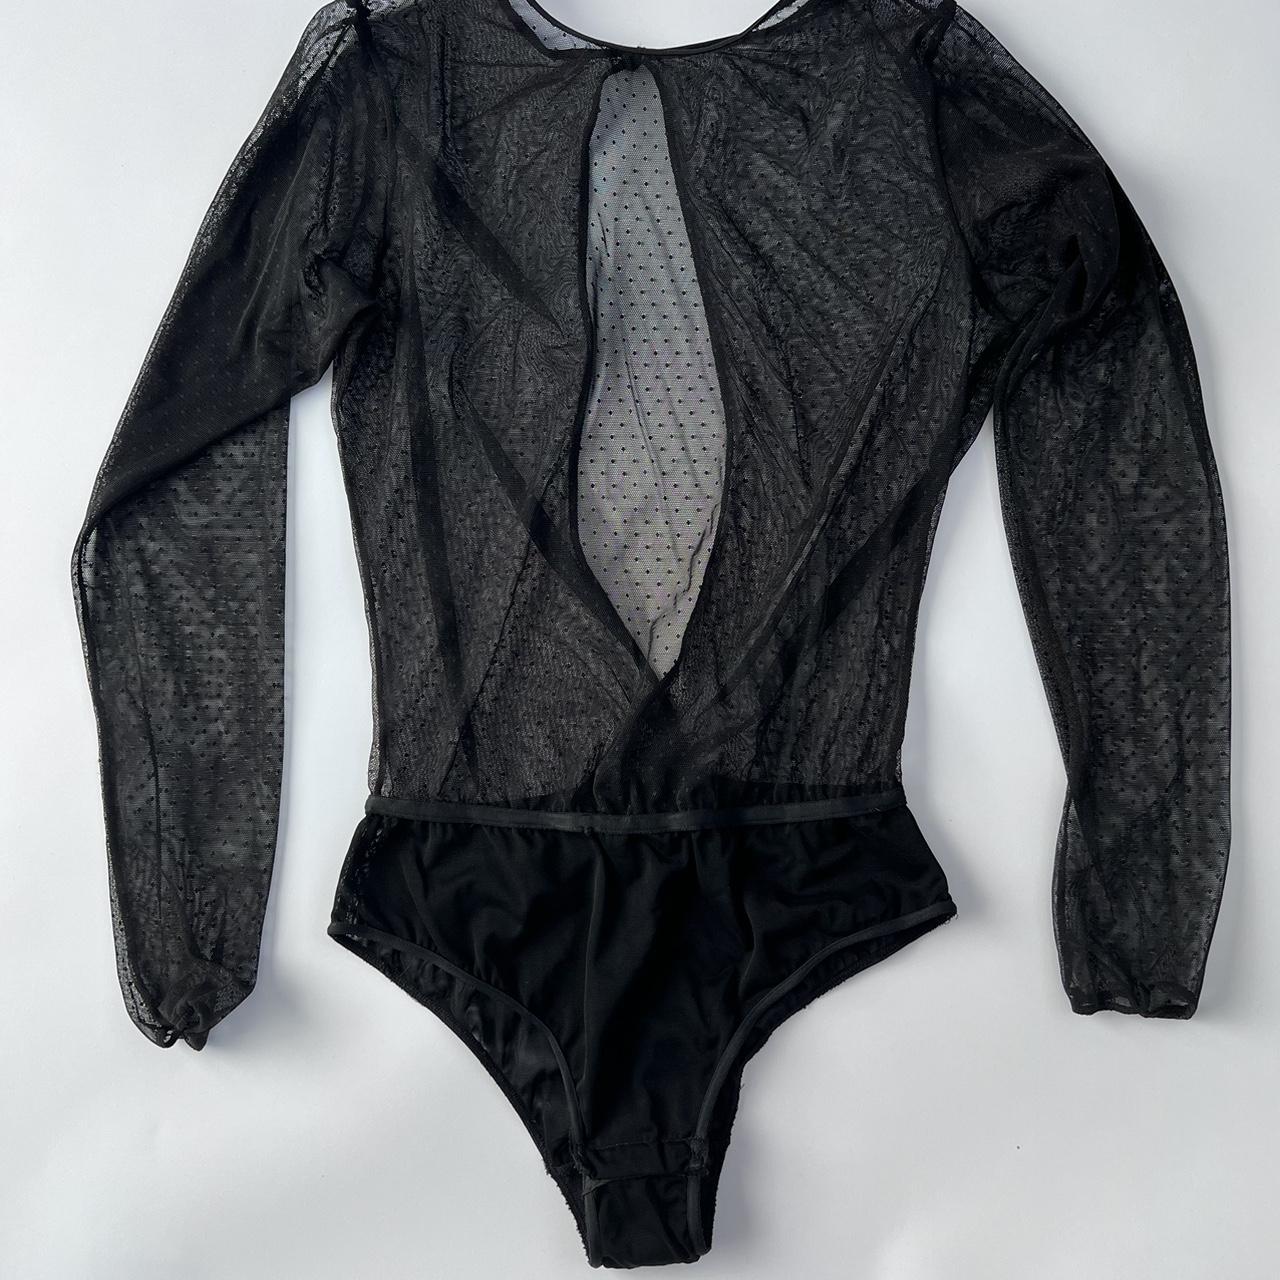 Black see through lingerie bodysuit size S/M - Depop